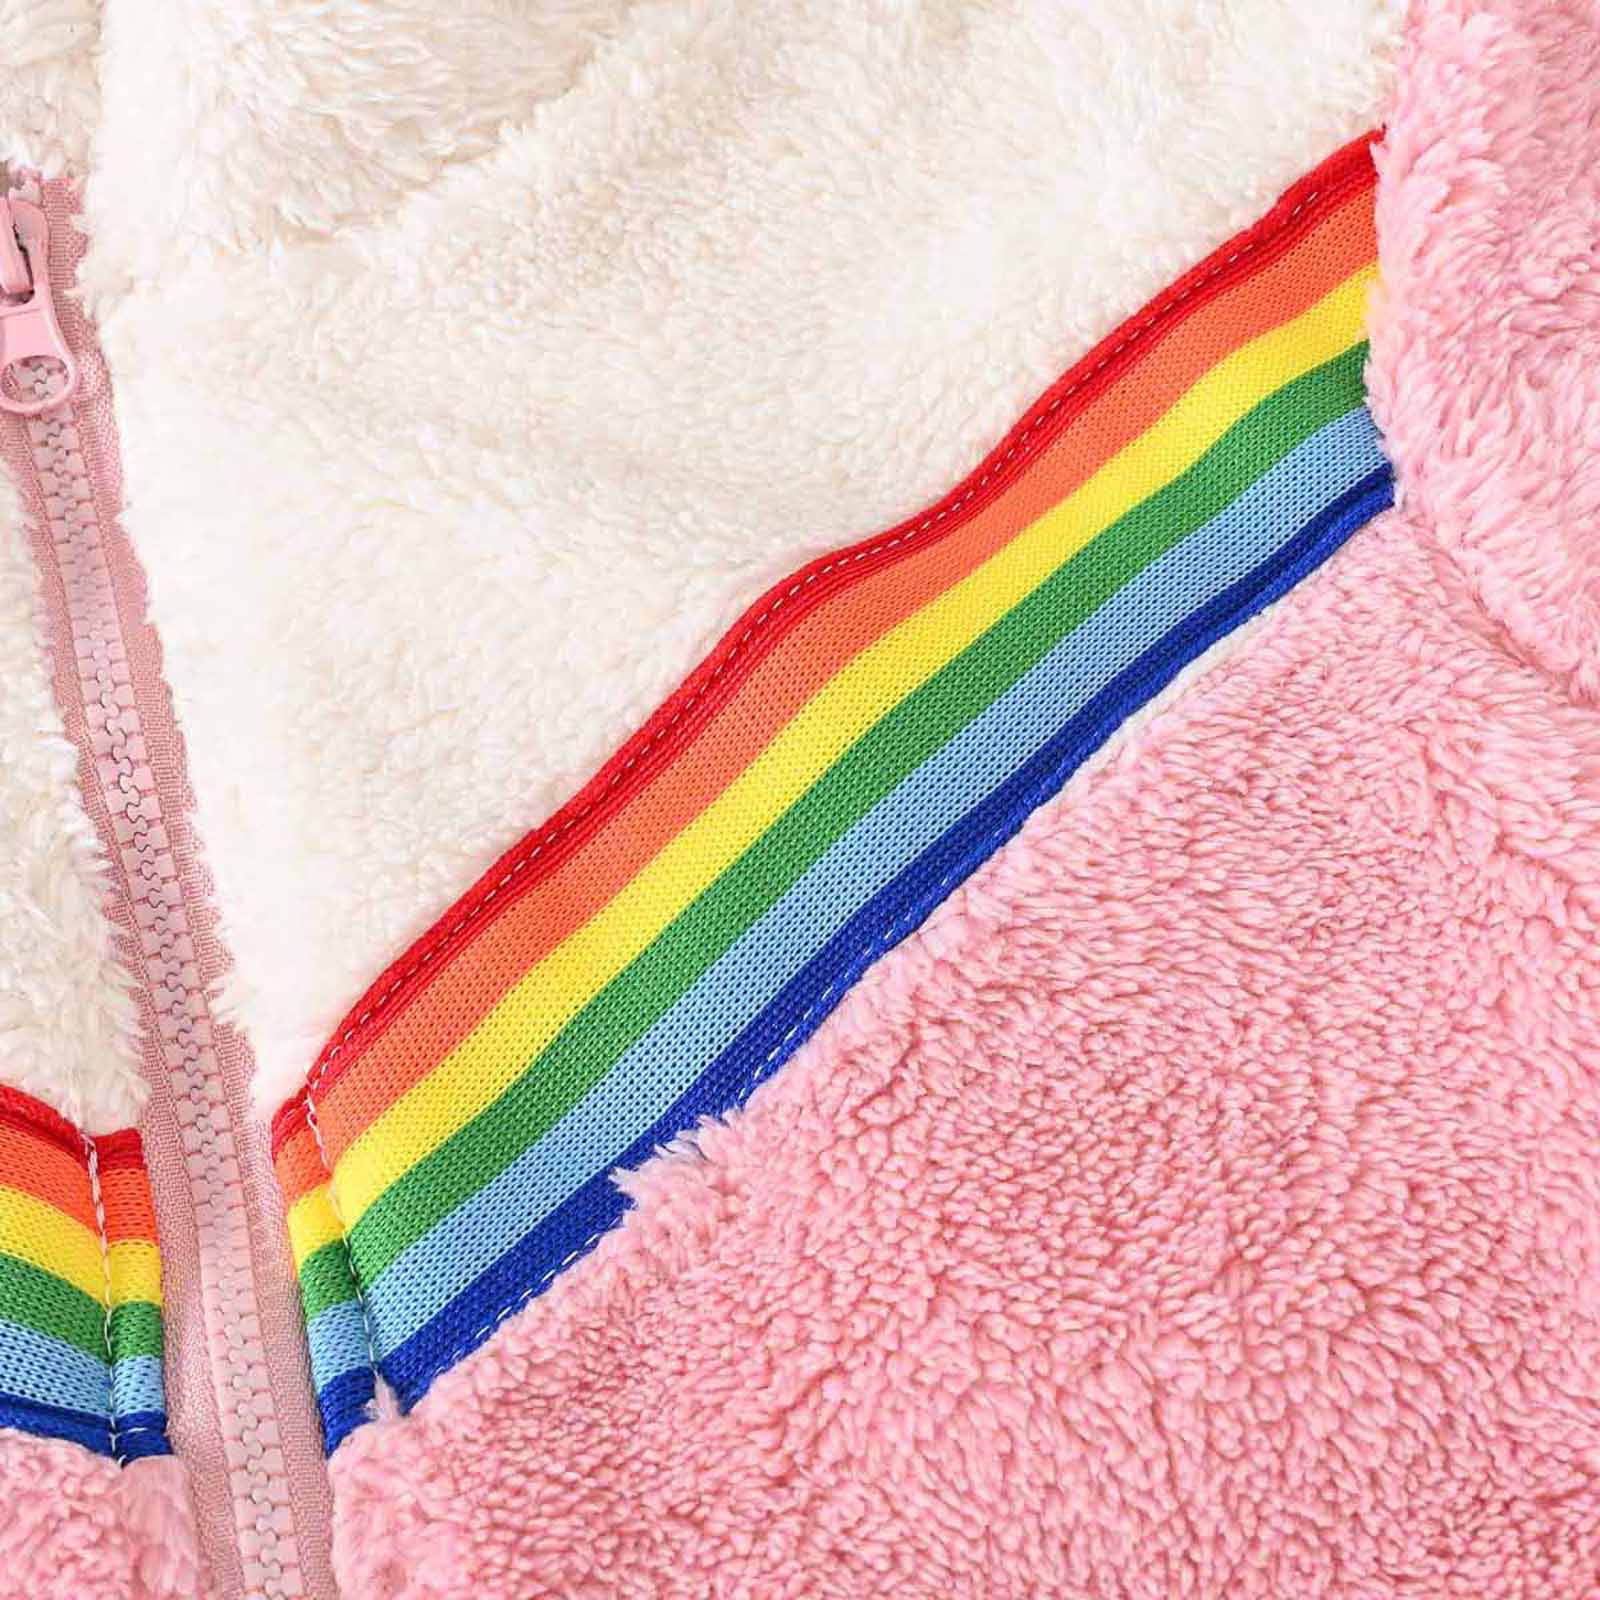 YYDGH Girls Zipper Jacket Fuzzy Sweatshirt Long Sleeve Casual Cozy Fleece Sherpa Outwear Coat Full-Zip Rainbow Jackets(Pink,3-4 Years) - image 3 of 8